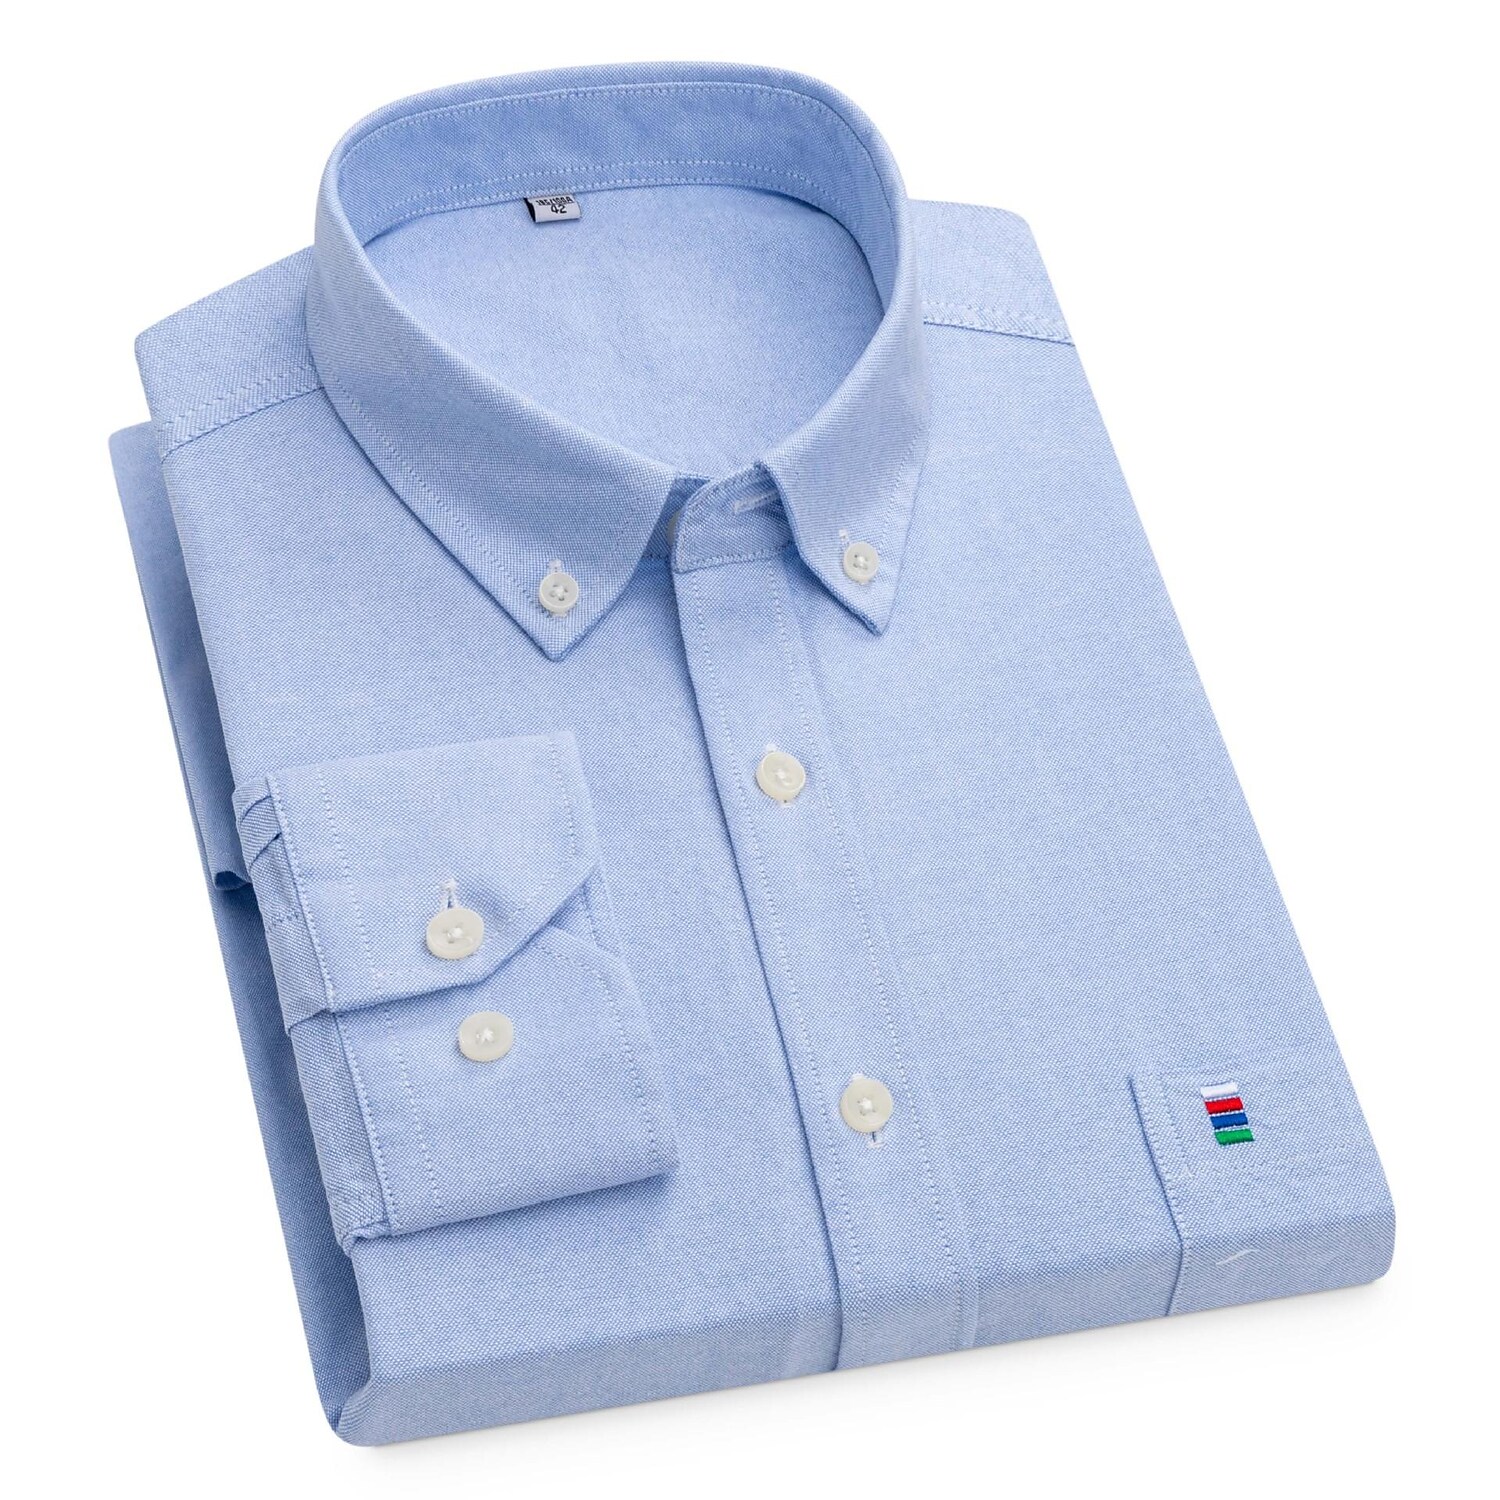 Rogoman Men's Oxford Cotton Solid Color Long-sleeved Shirt